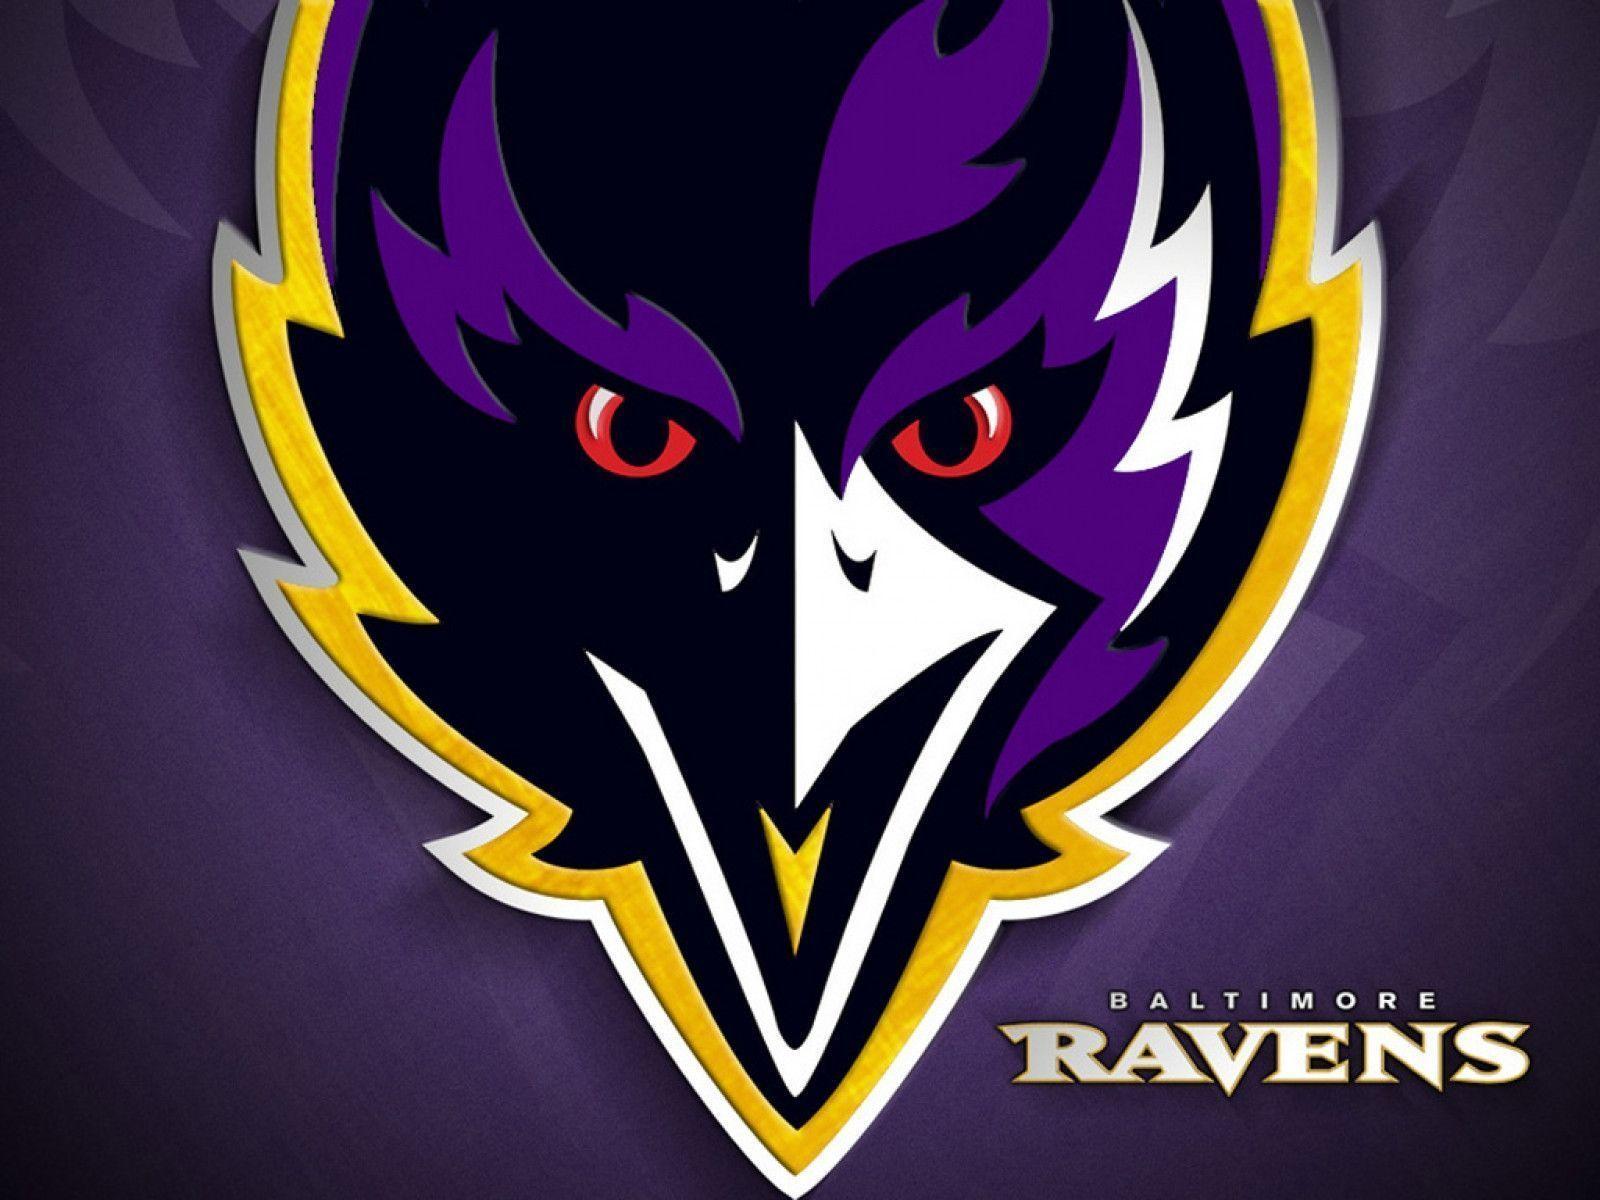 The best Baltimore Ravens wallpaper ever??. Baltimore Ravens